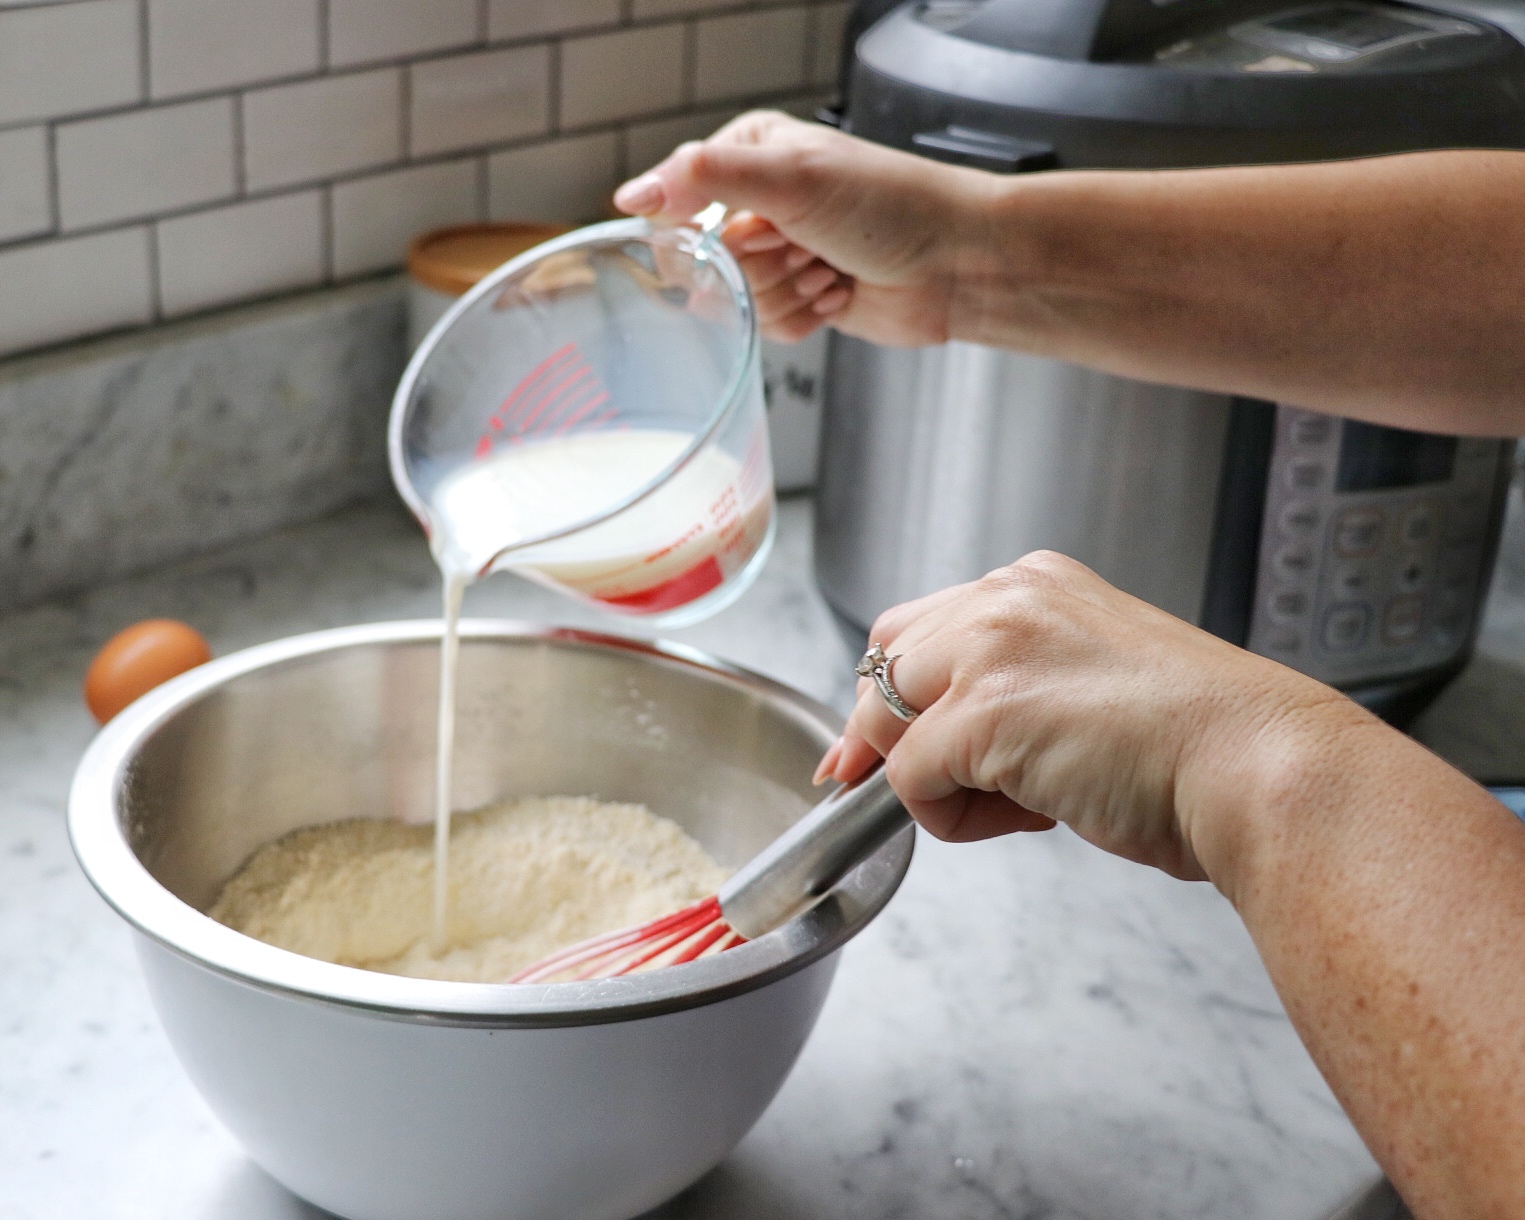 How to make pressure cooker cornbread